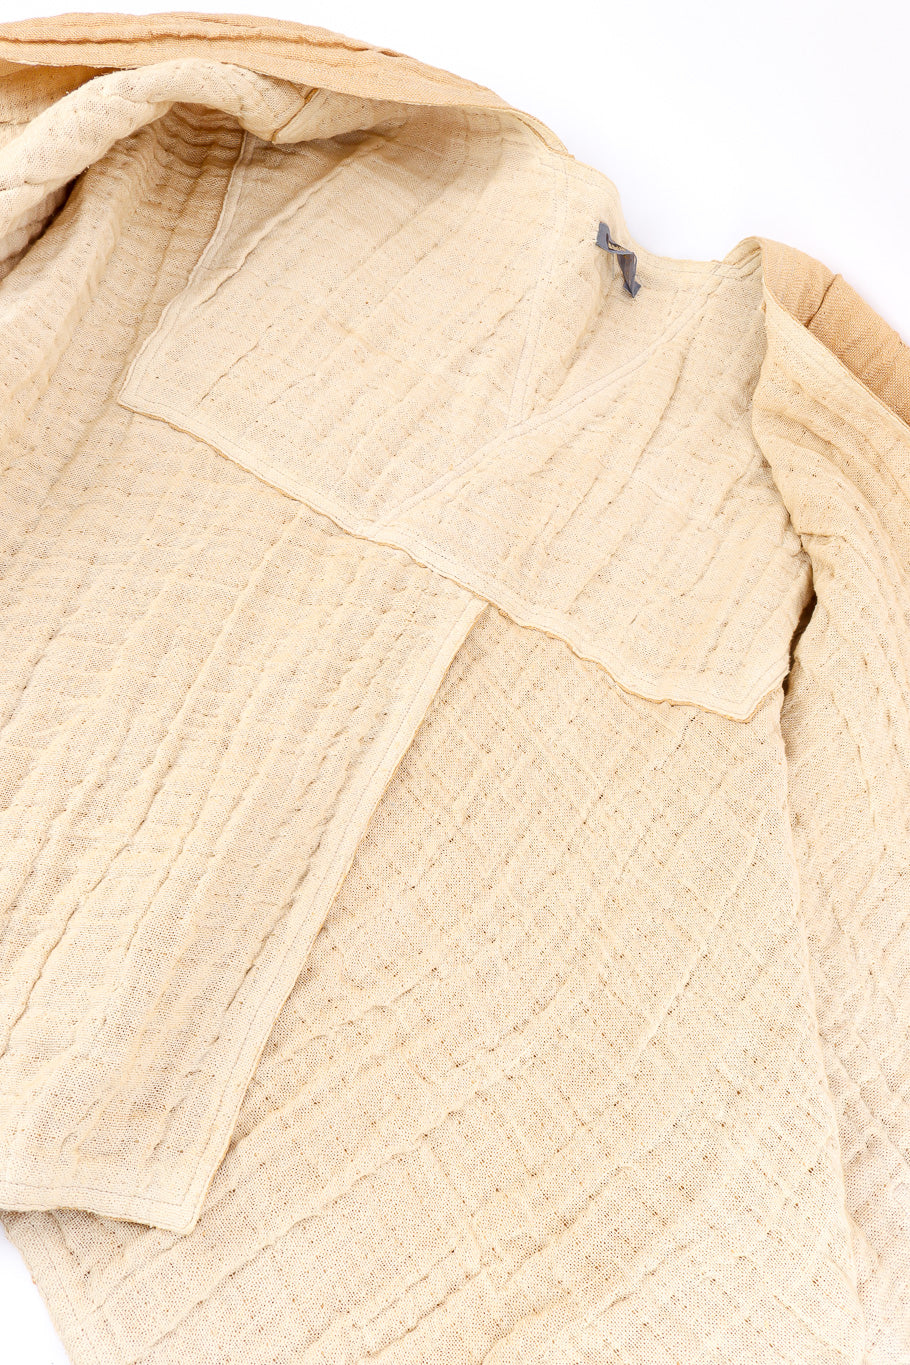 Issey Miyake Flax Linen Pleated Kimono inner view @Recessla